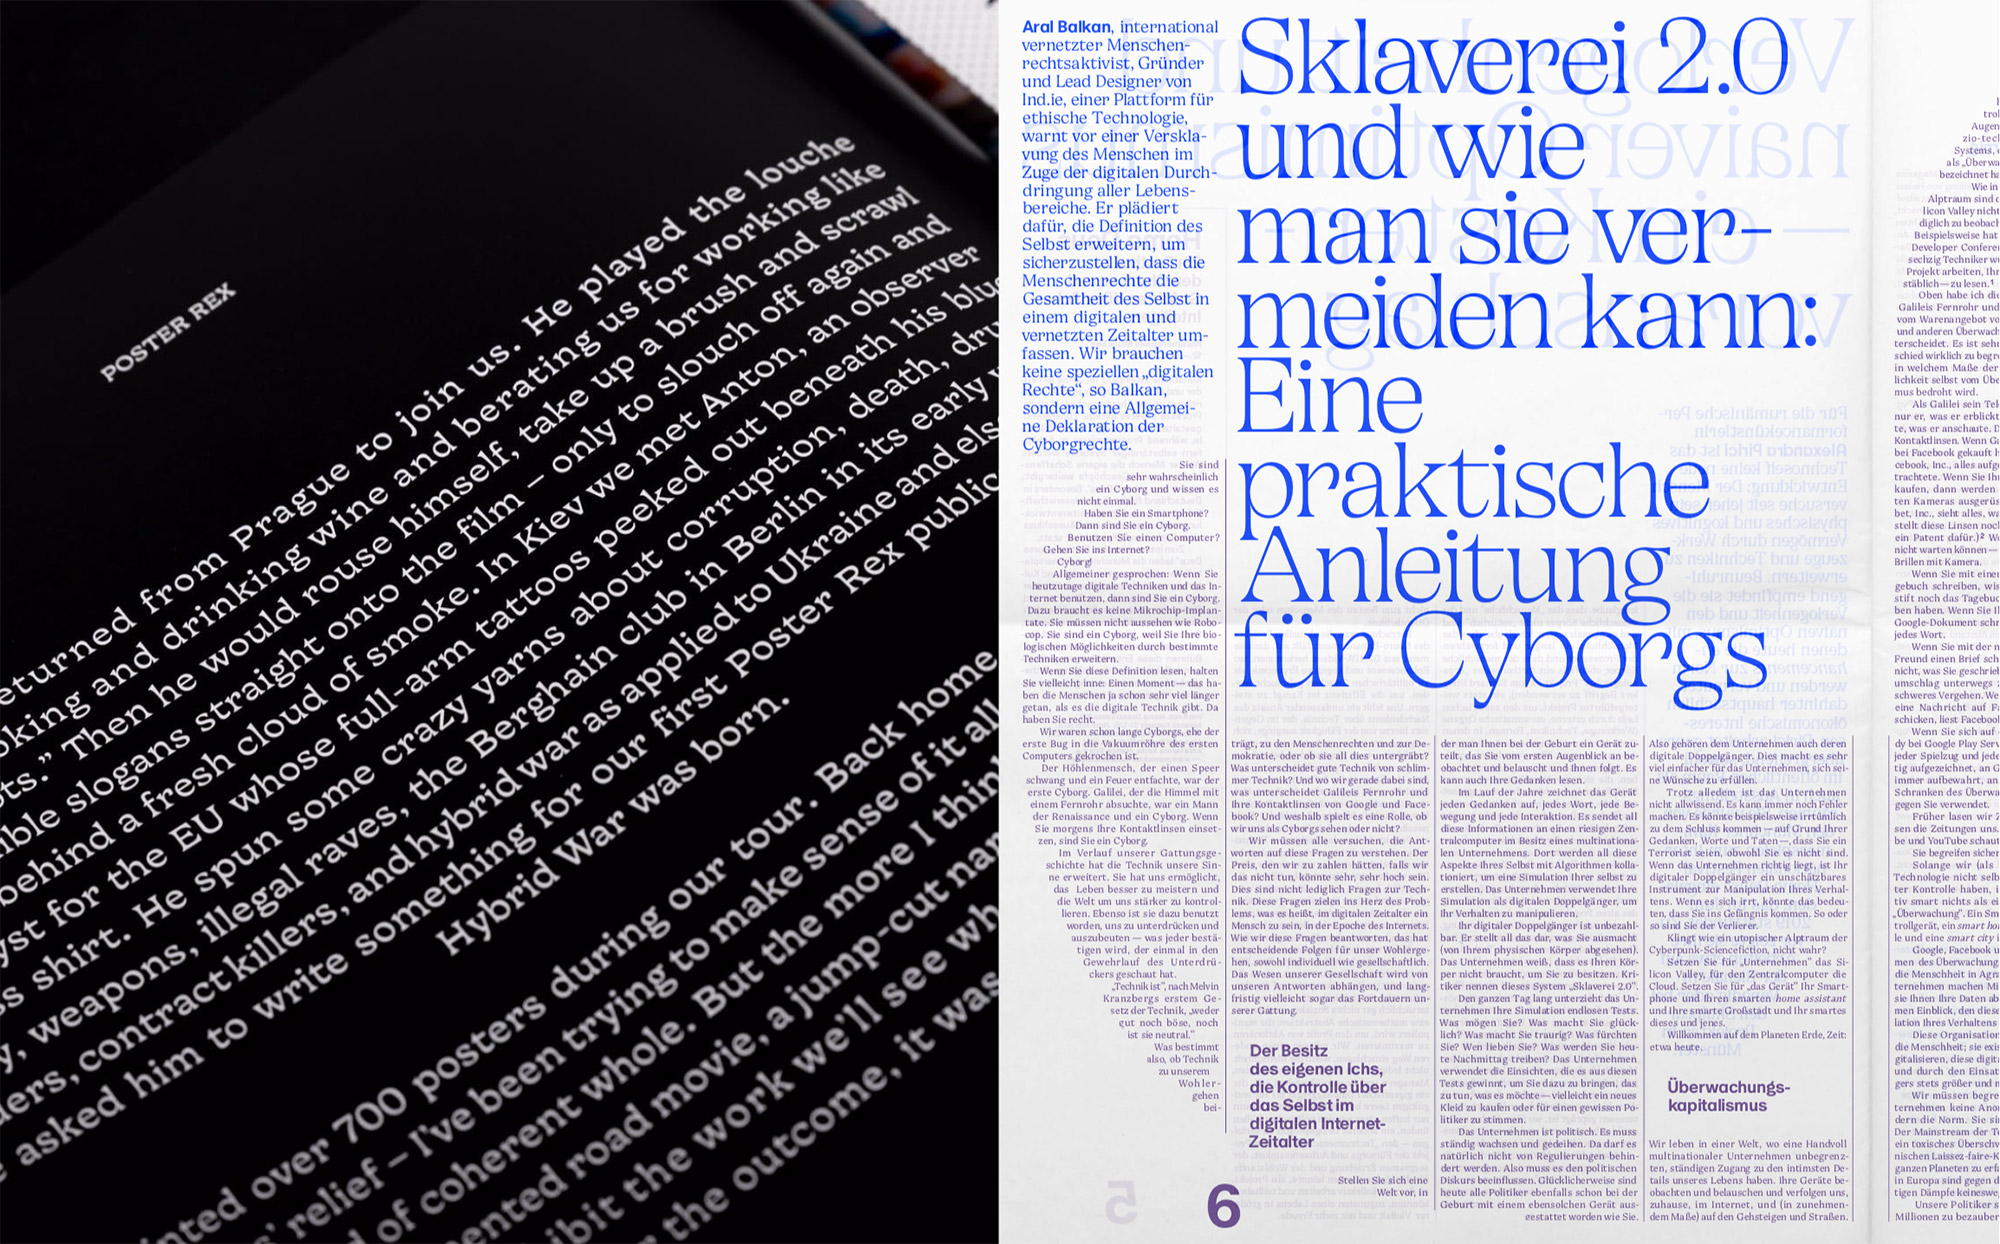 Typeface-Family-Dialogue__IN-USE__Left-PosterRex-MarkusLange--Right-KSB-No32-BureauDavidVoss